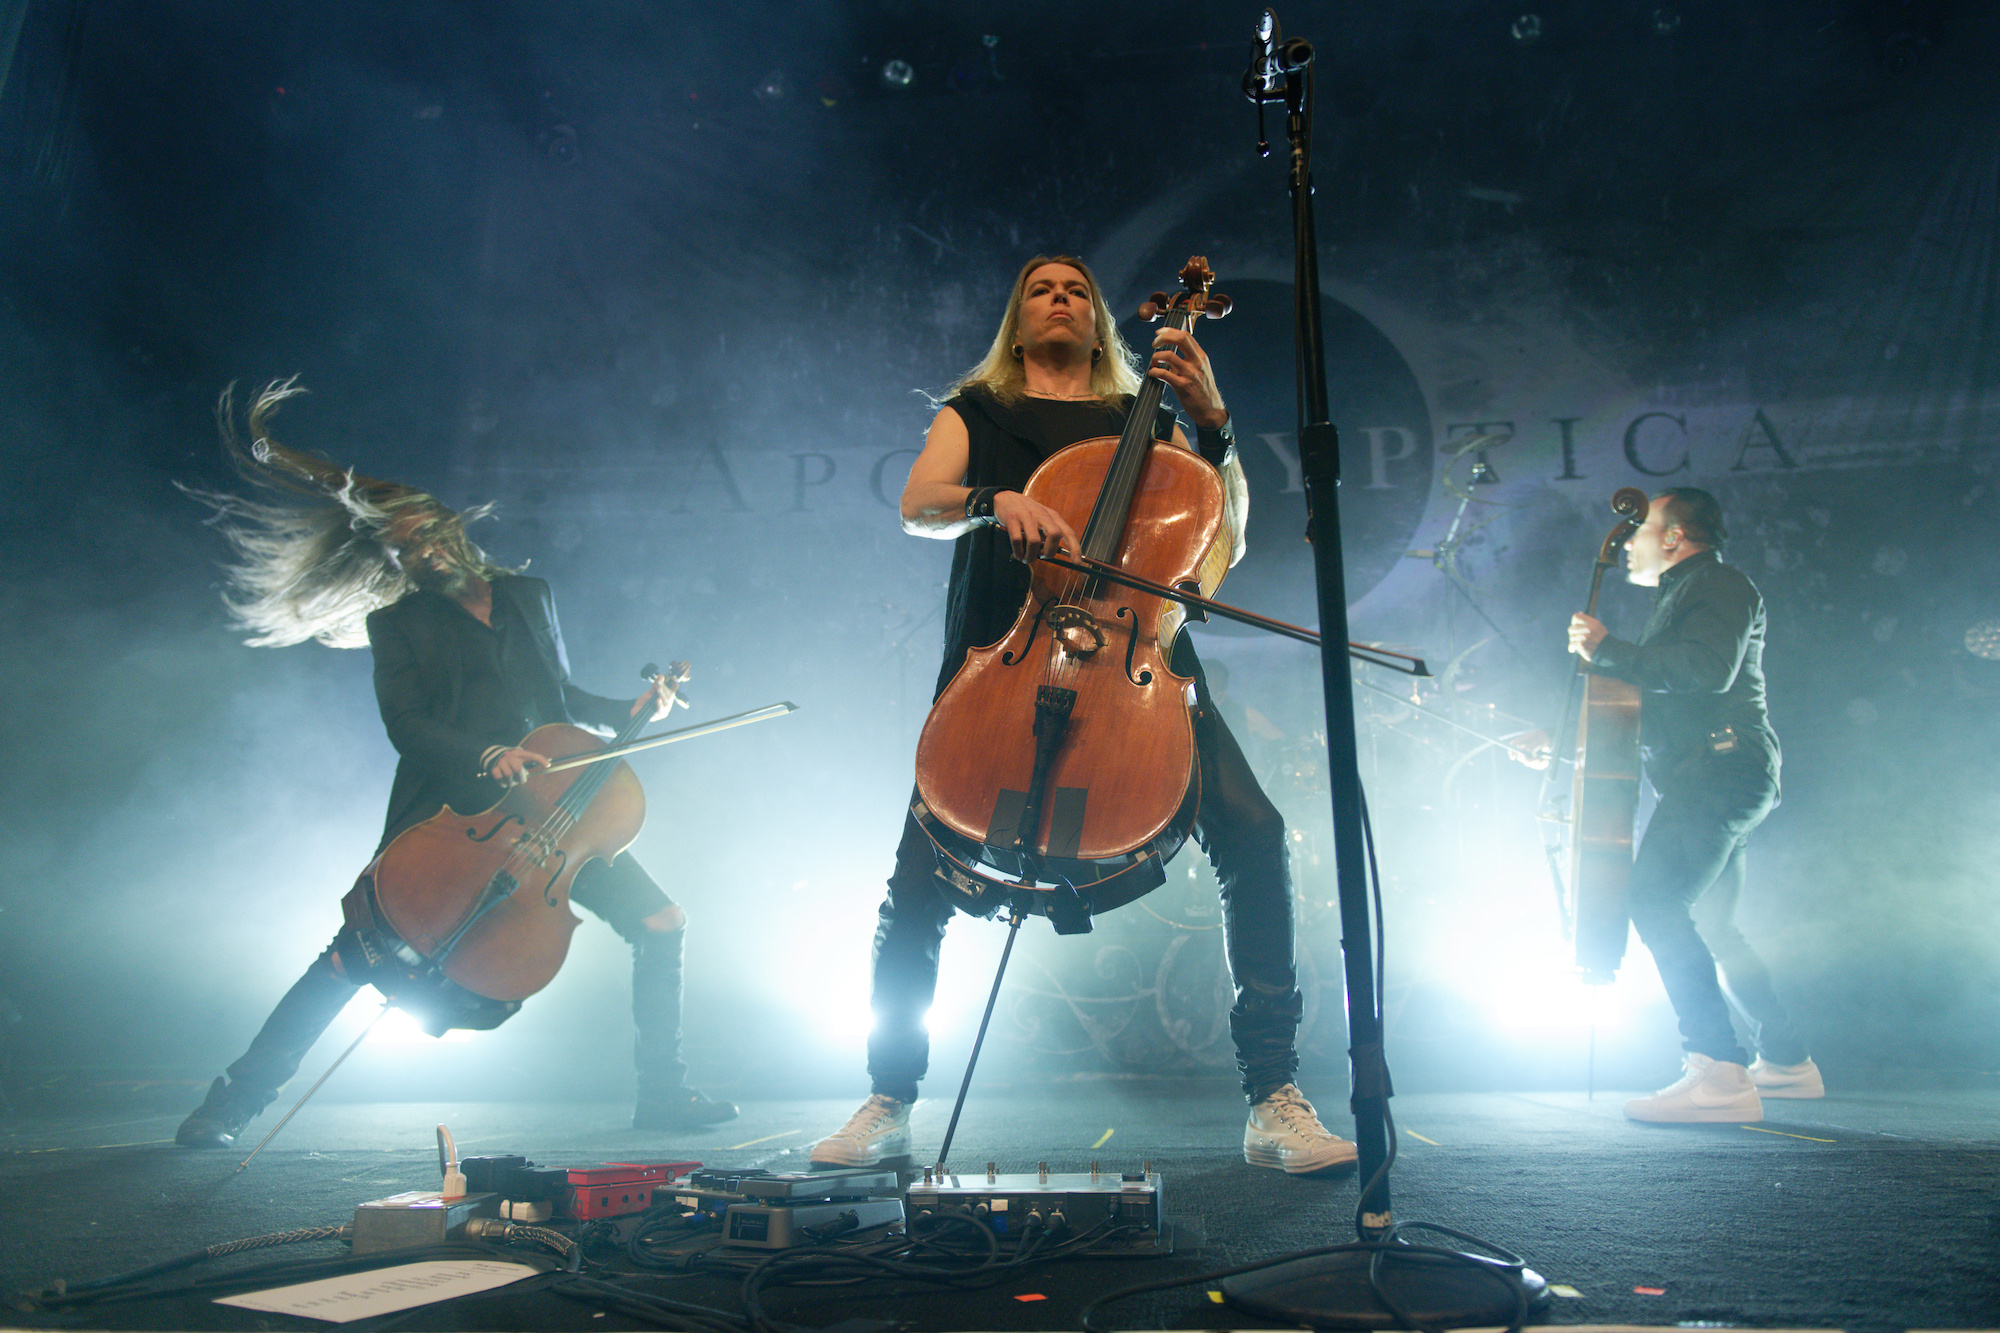 Apocalyptica live shots, Lacuna Coil concert, 2000x1340 HD Desktop